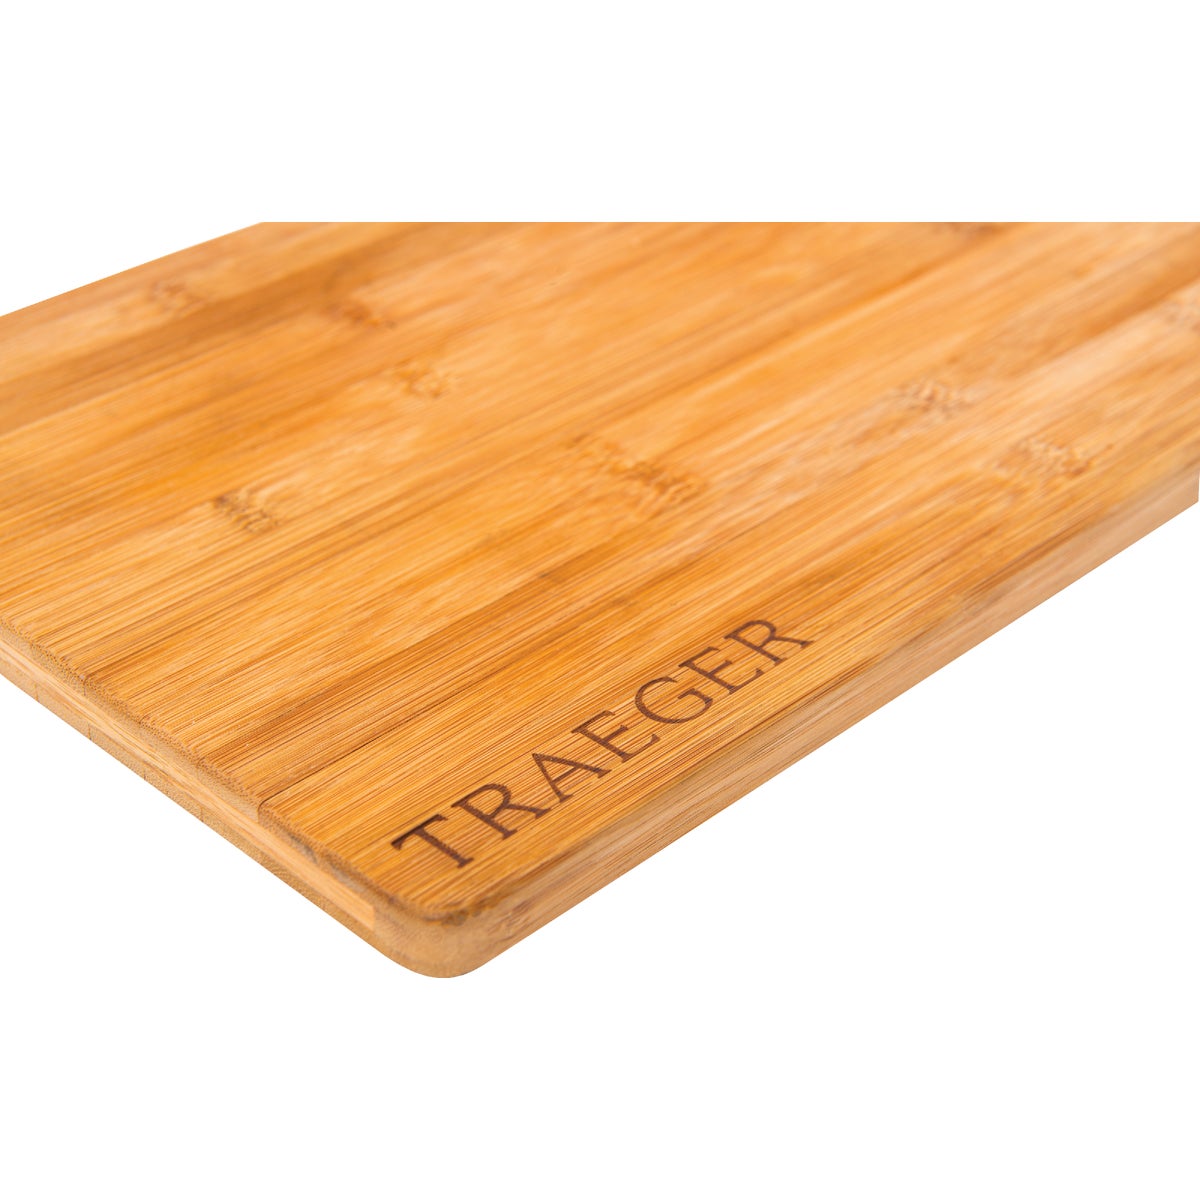 Traeger 9.5 In. x 13.5 In. Magnetic Bamboo Cutting Board